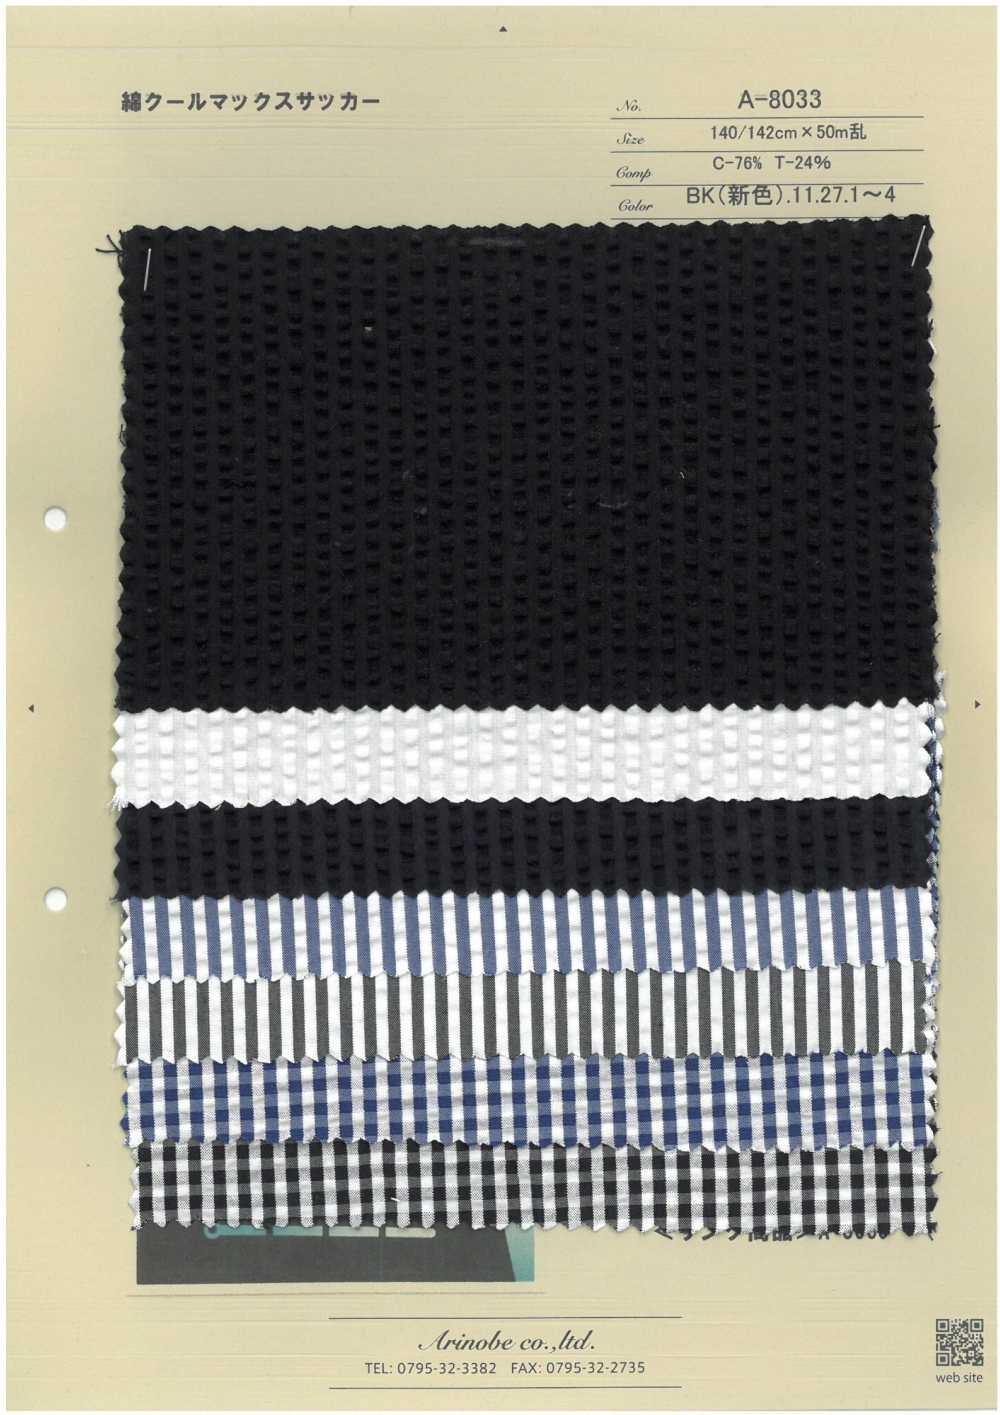 A-8033 Vải Sọc Nhăn Cotton Coolmax ARINOBE CO., LTD.